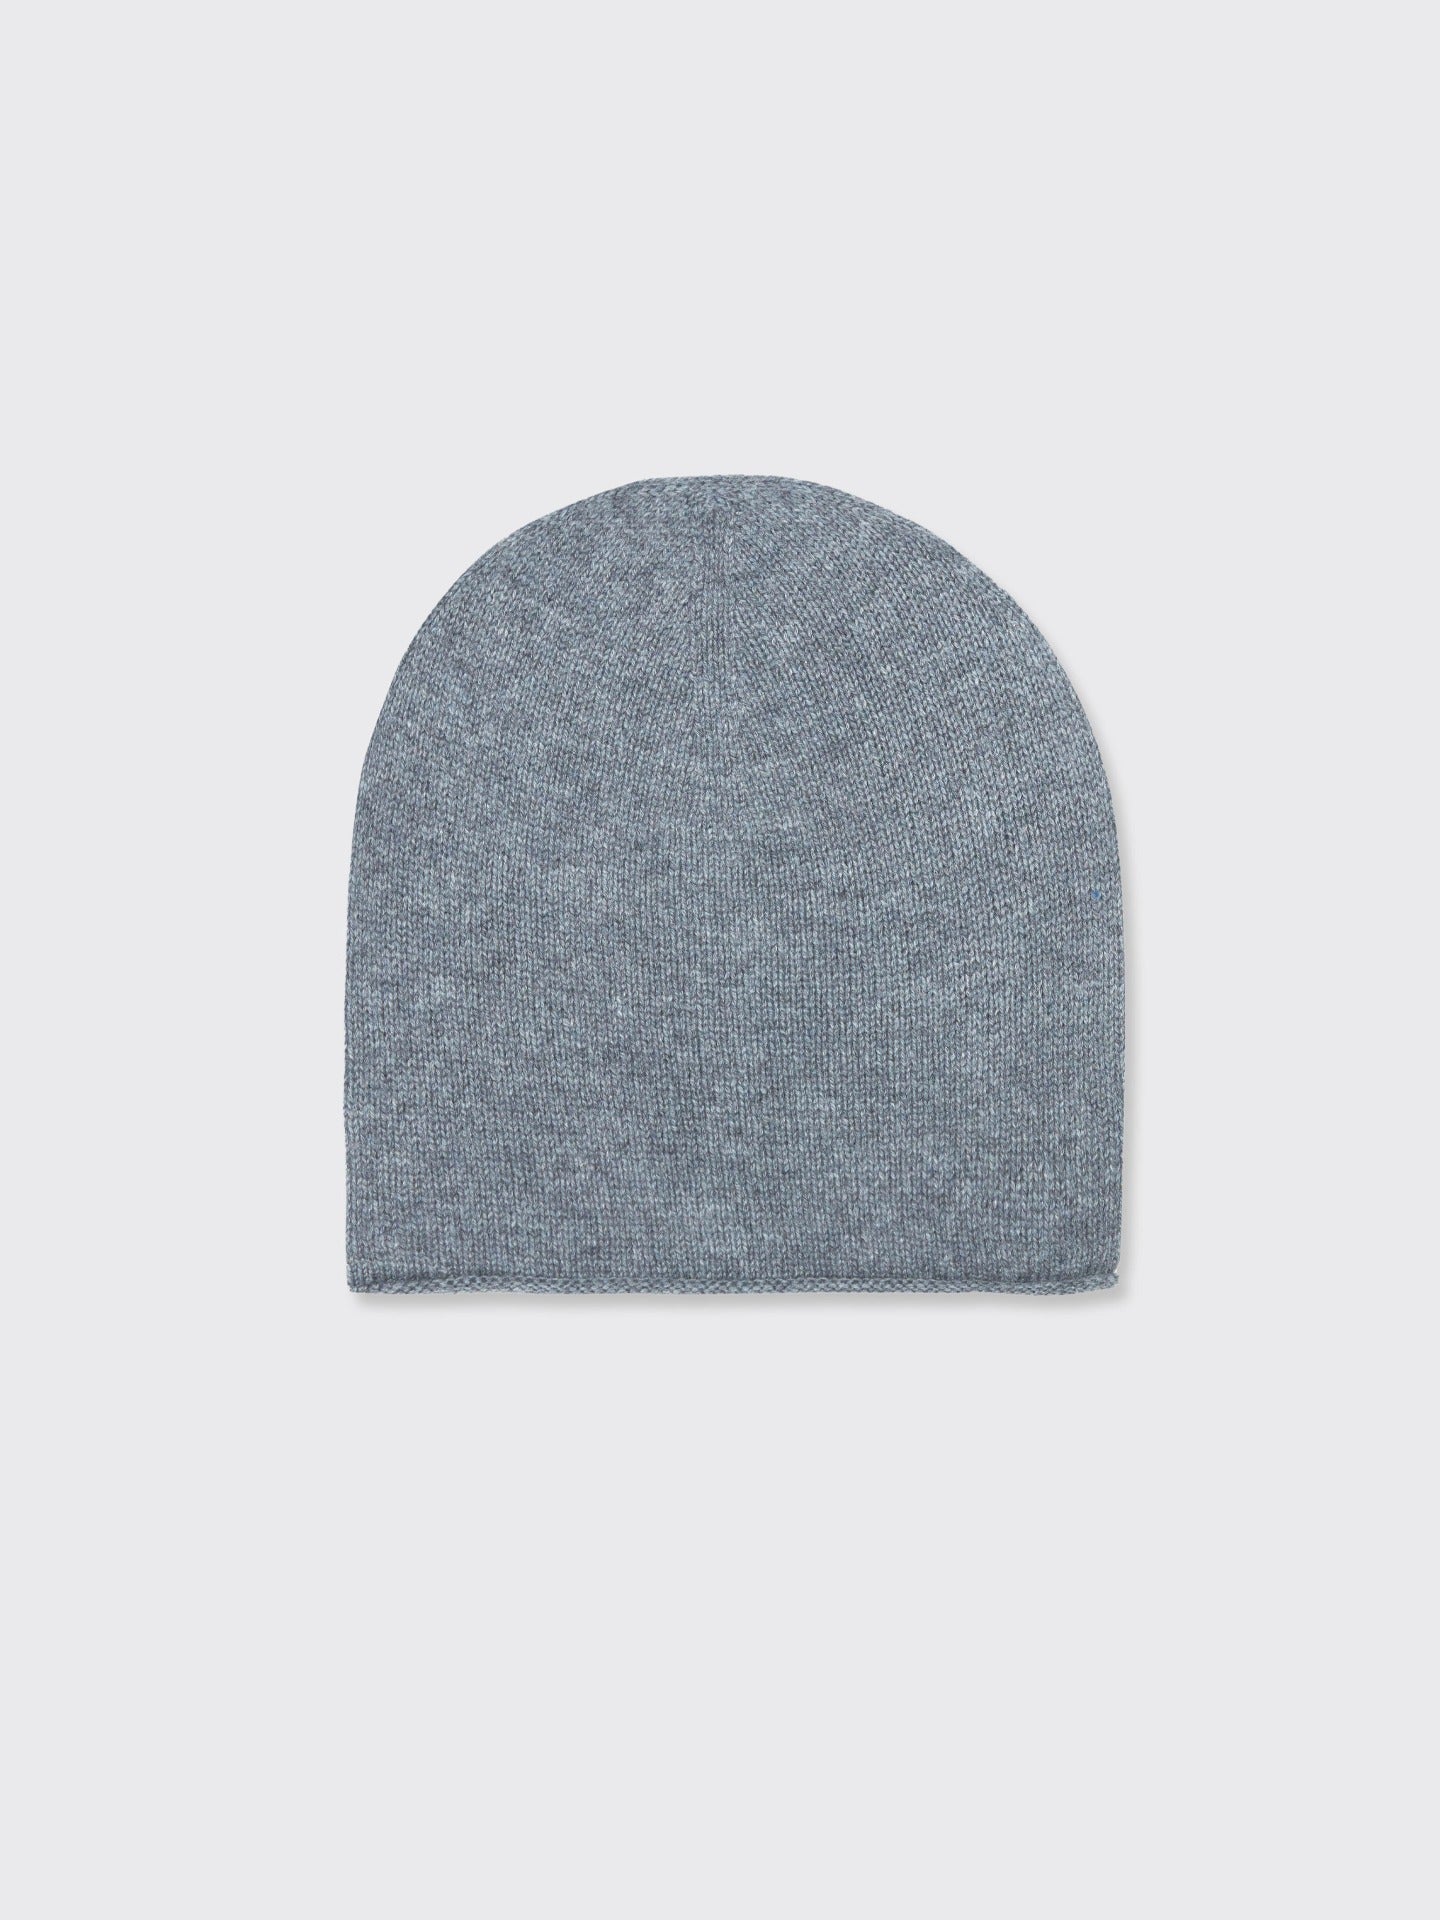 Women's Cashmere $99 Hat & Sweater Dim Gray - Gobi Cashmere